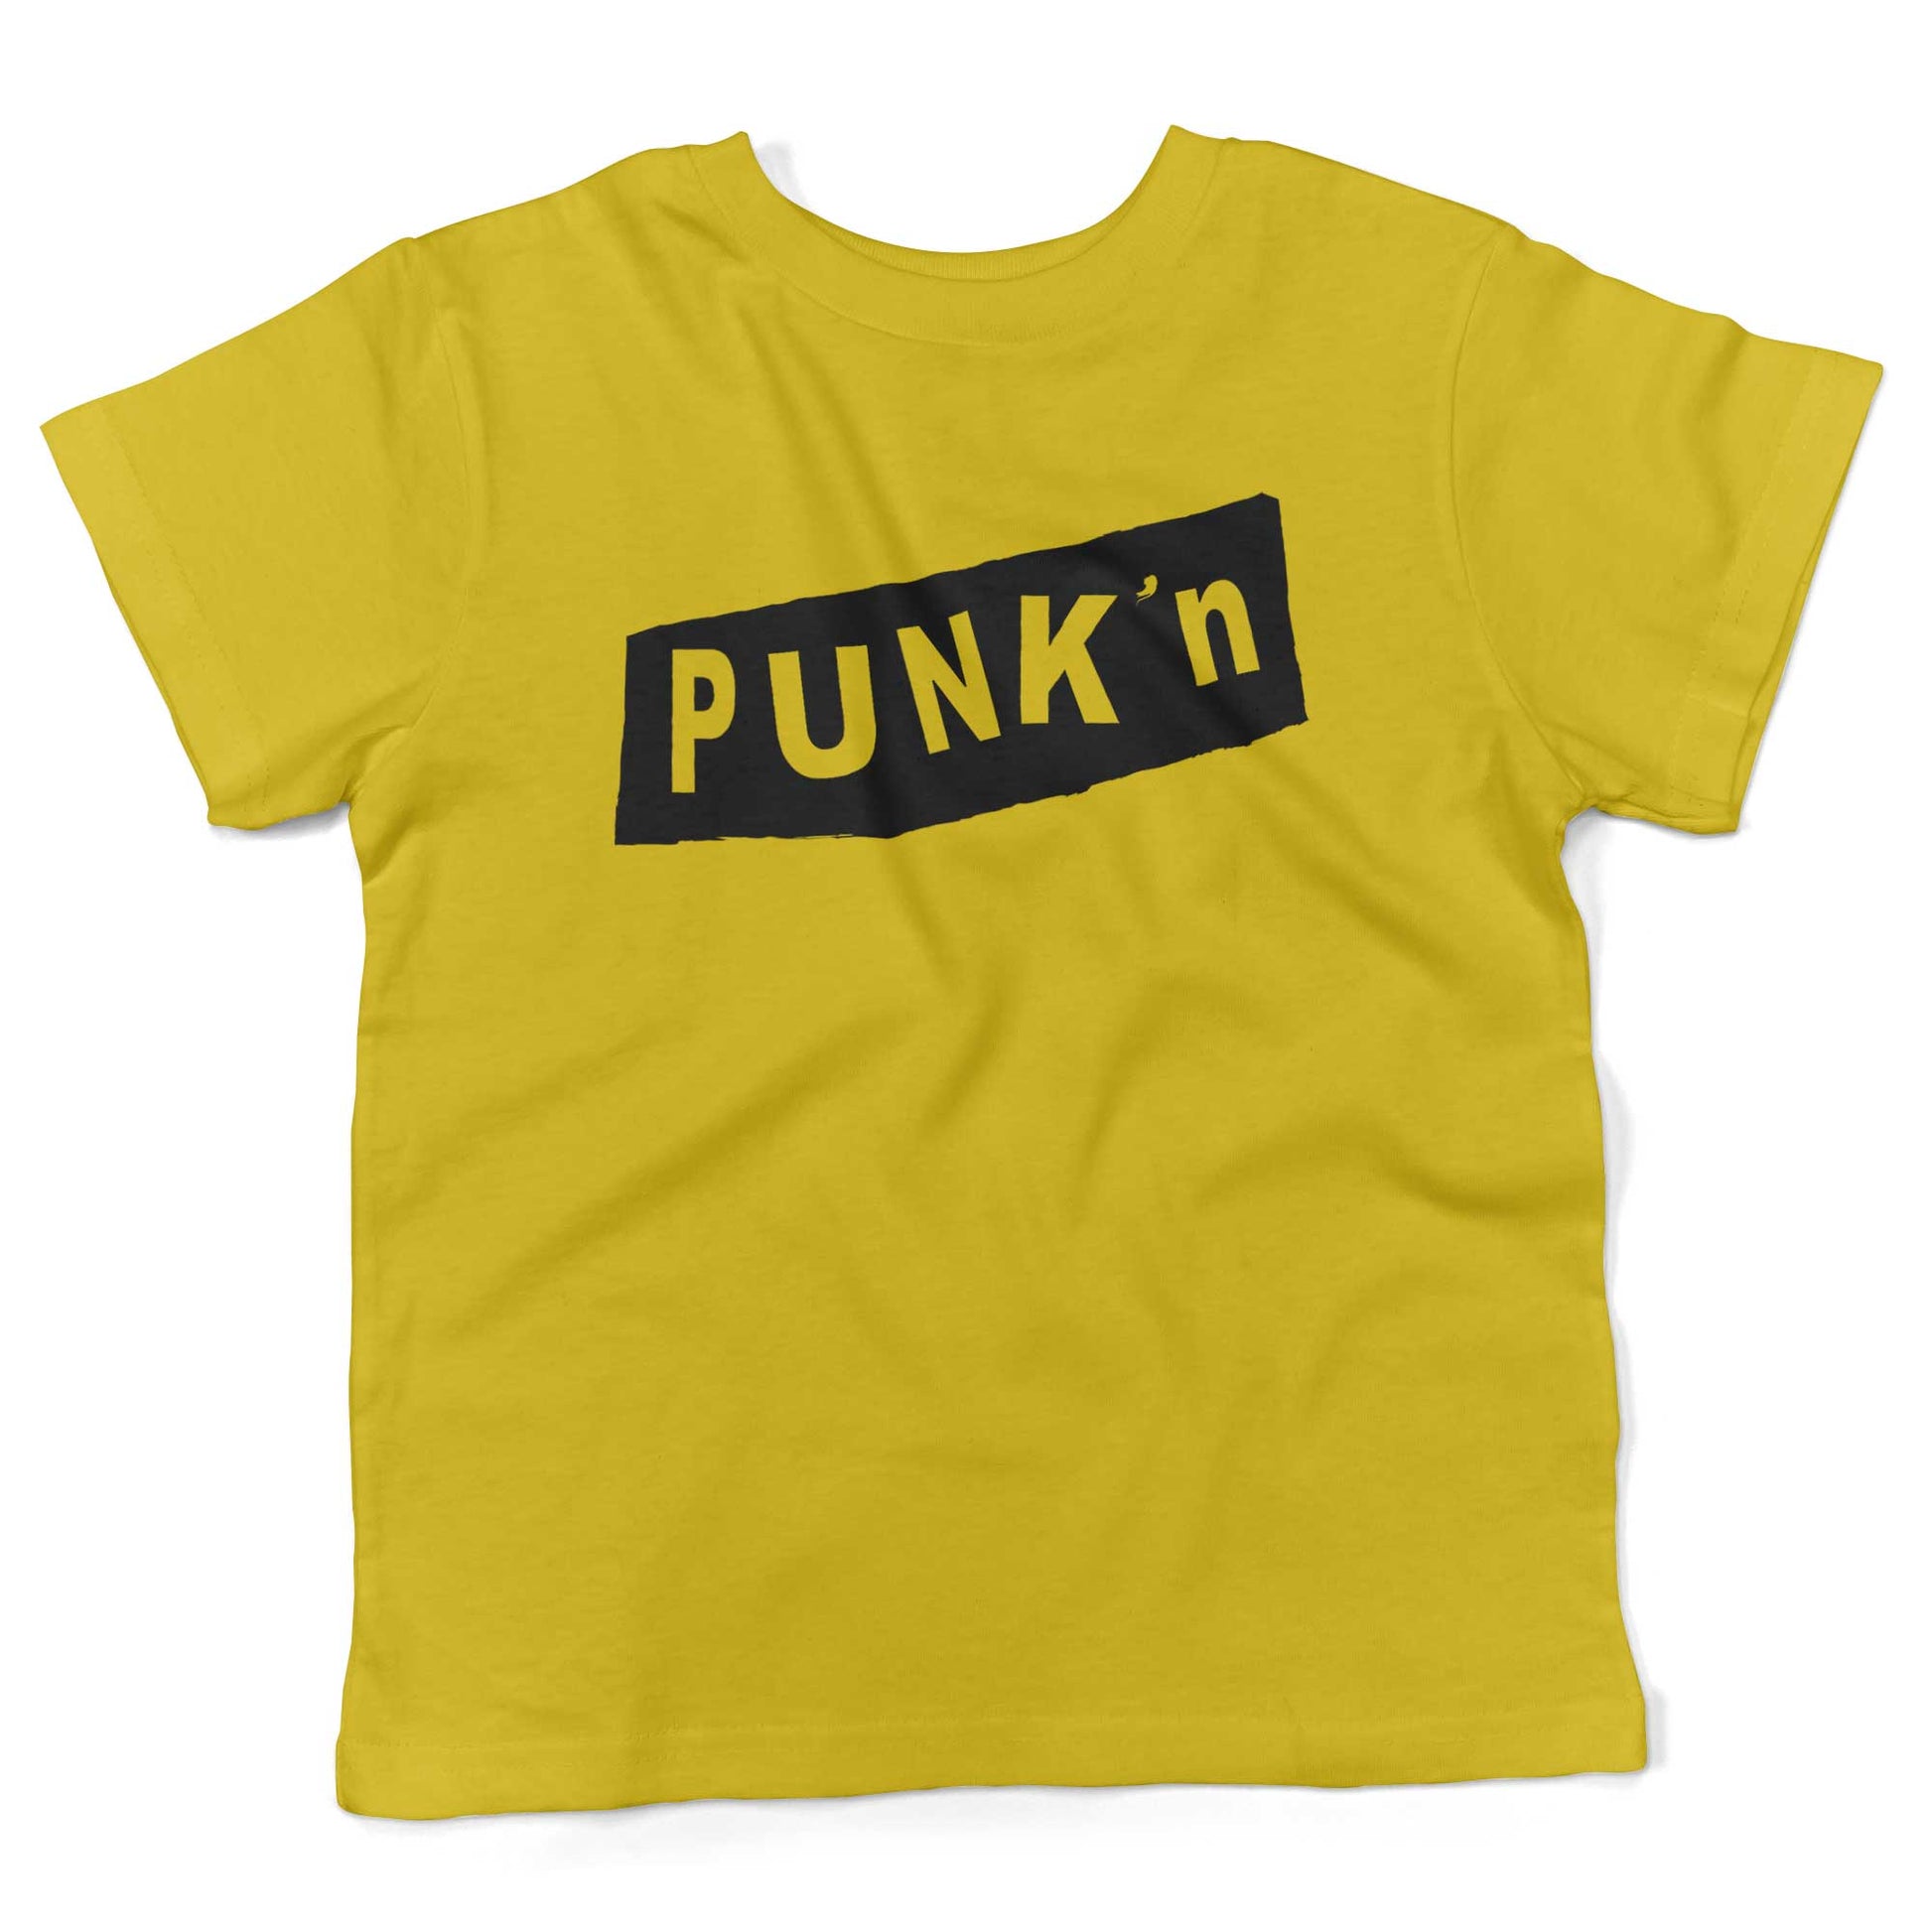 Pumpkin Punk'n Toddler Shirt-Sunshine Yellow-2T